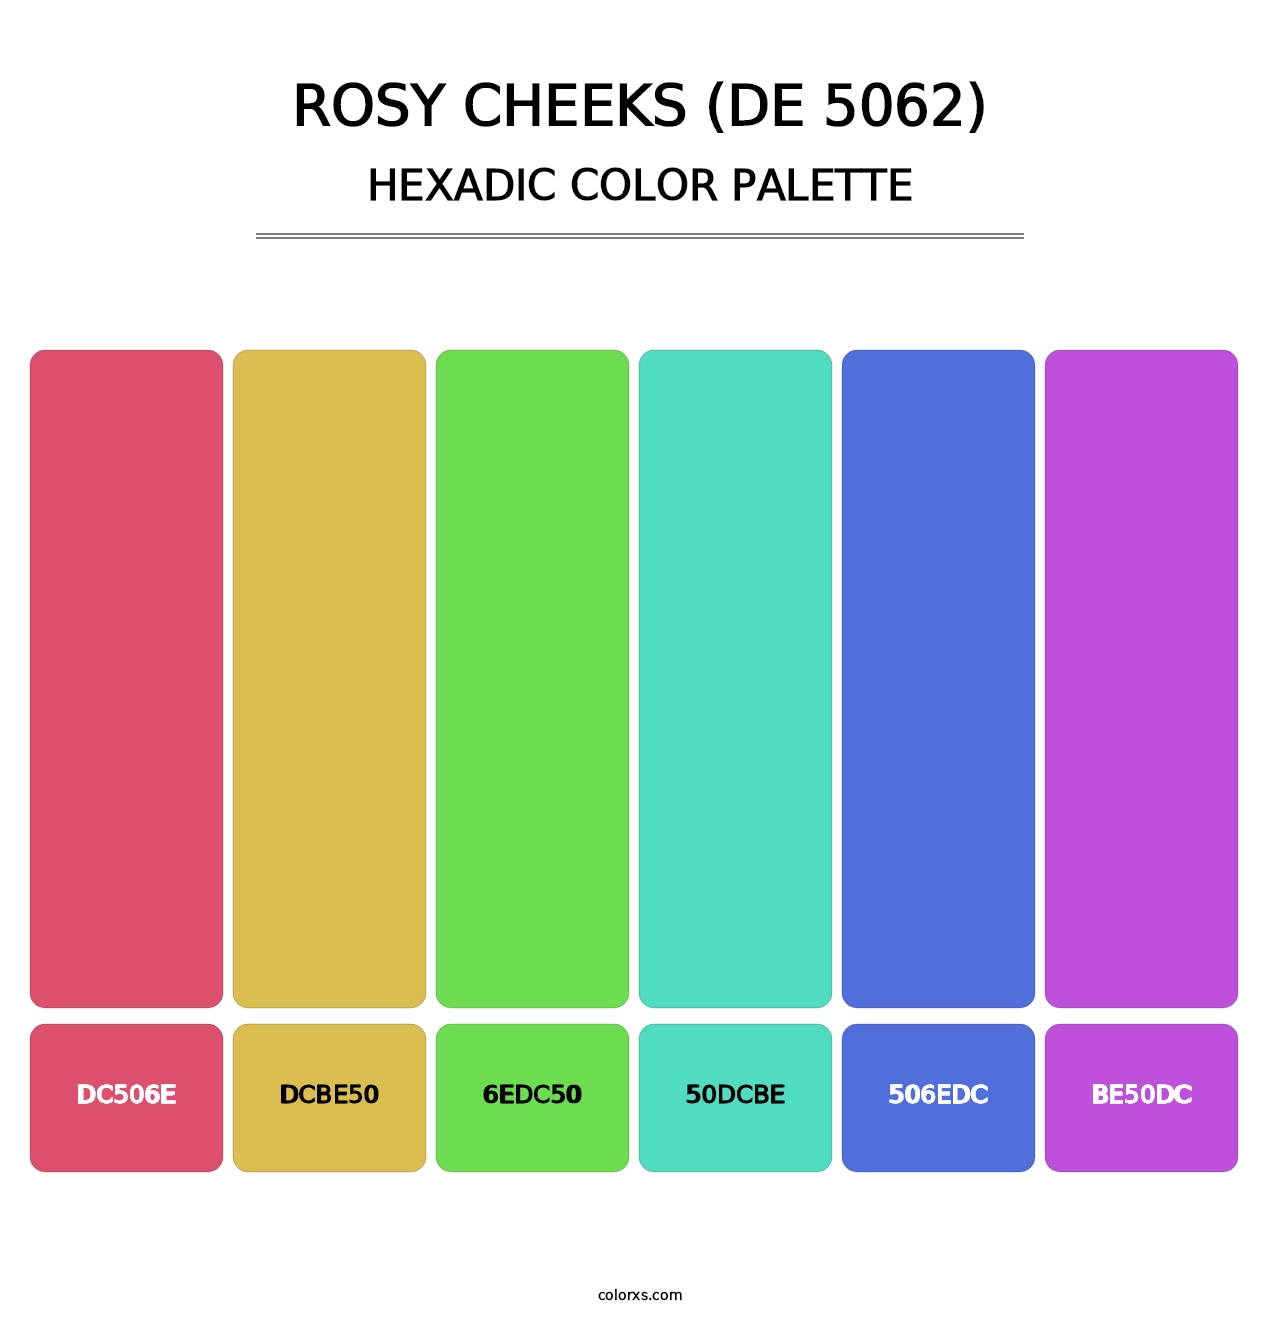 Rosy Cheeks (DE 5062) - Hexadic Color Palette